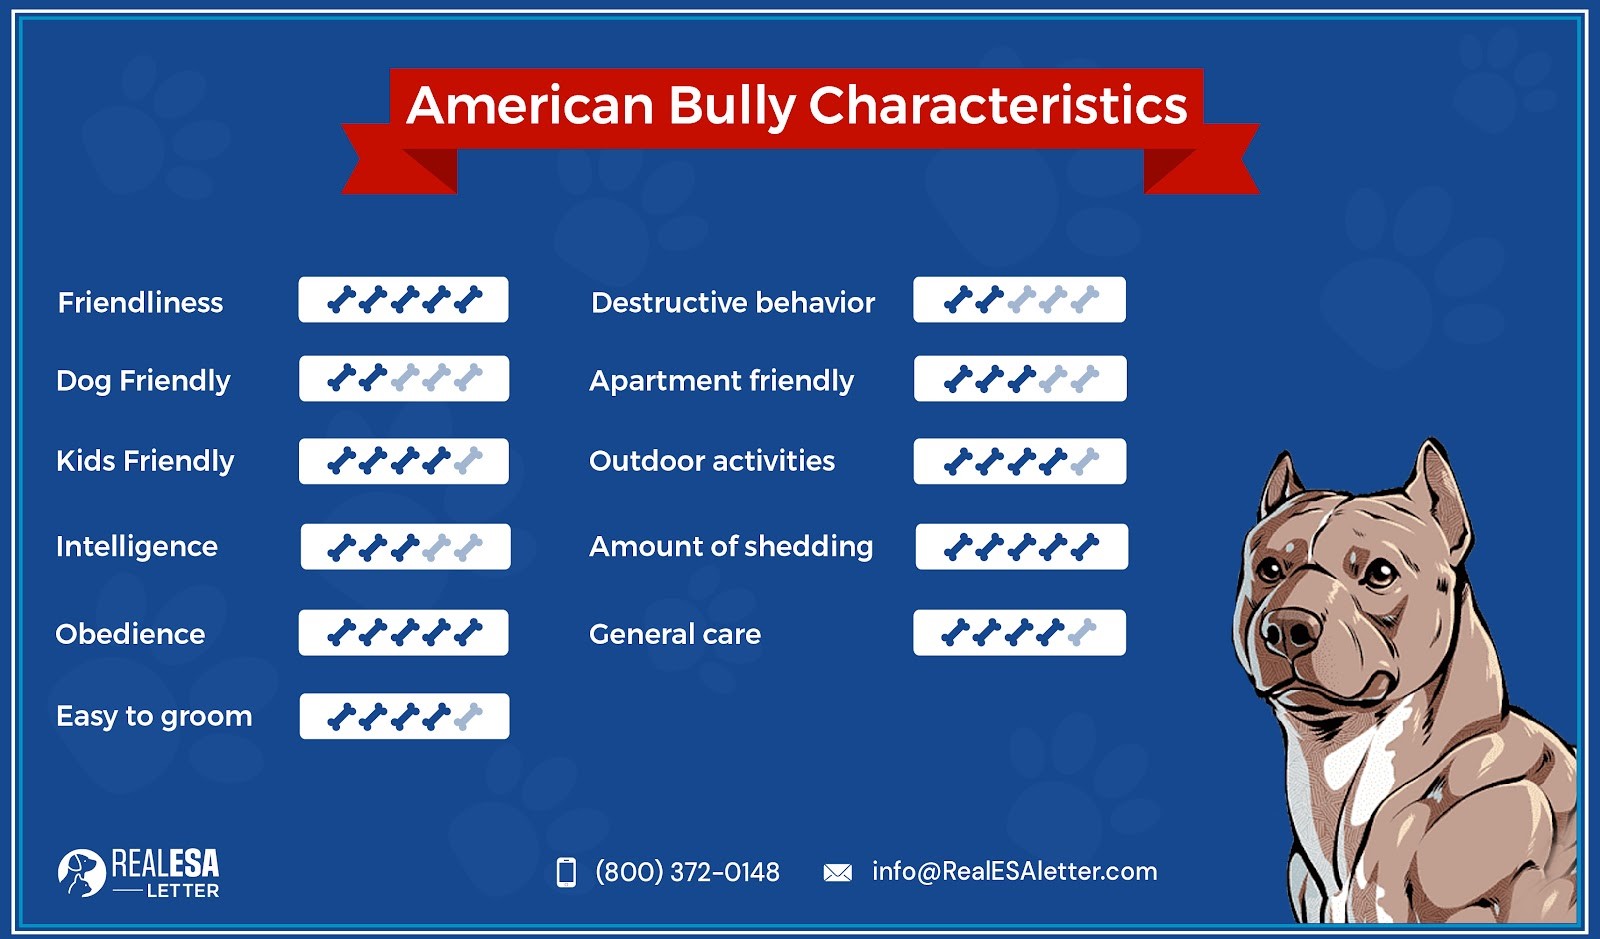 American bully characteristics